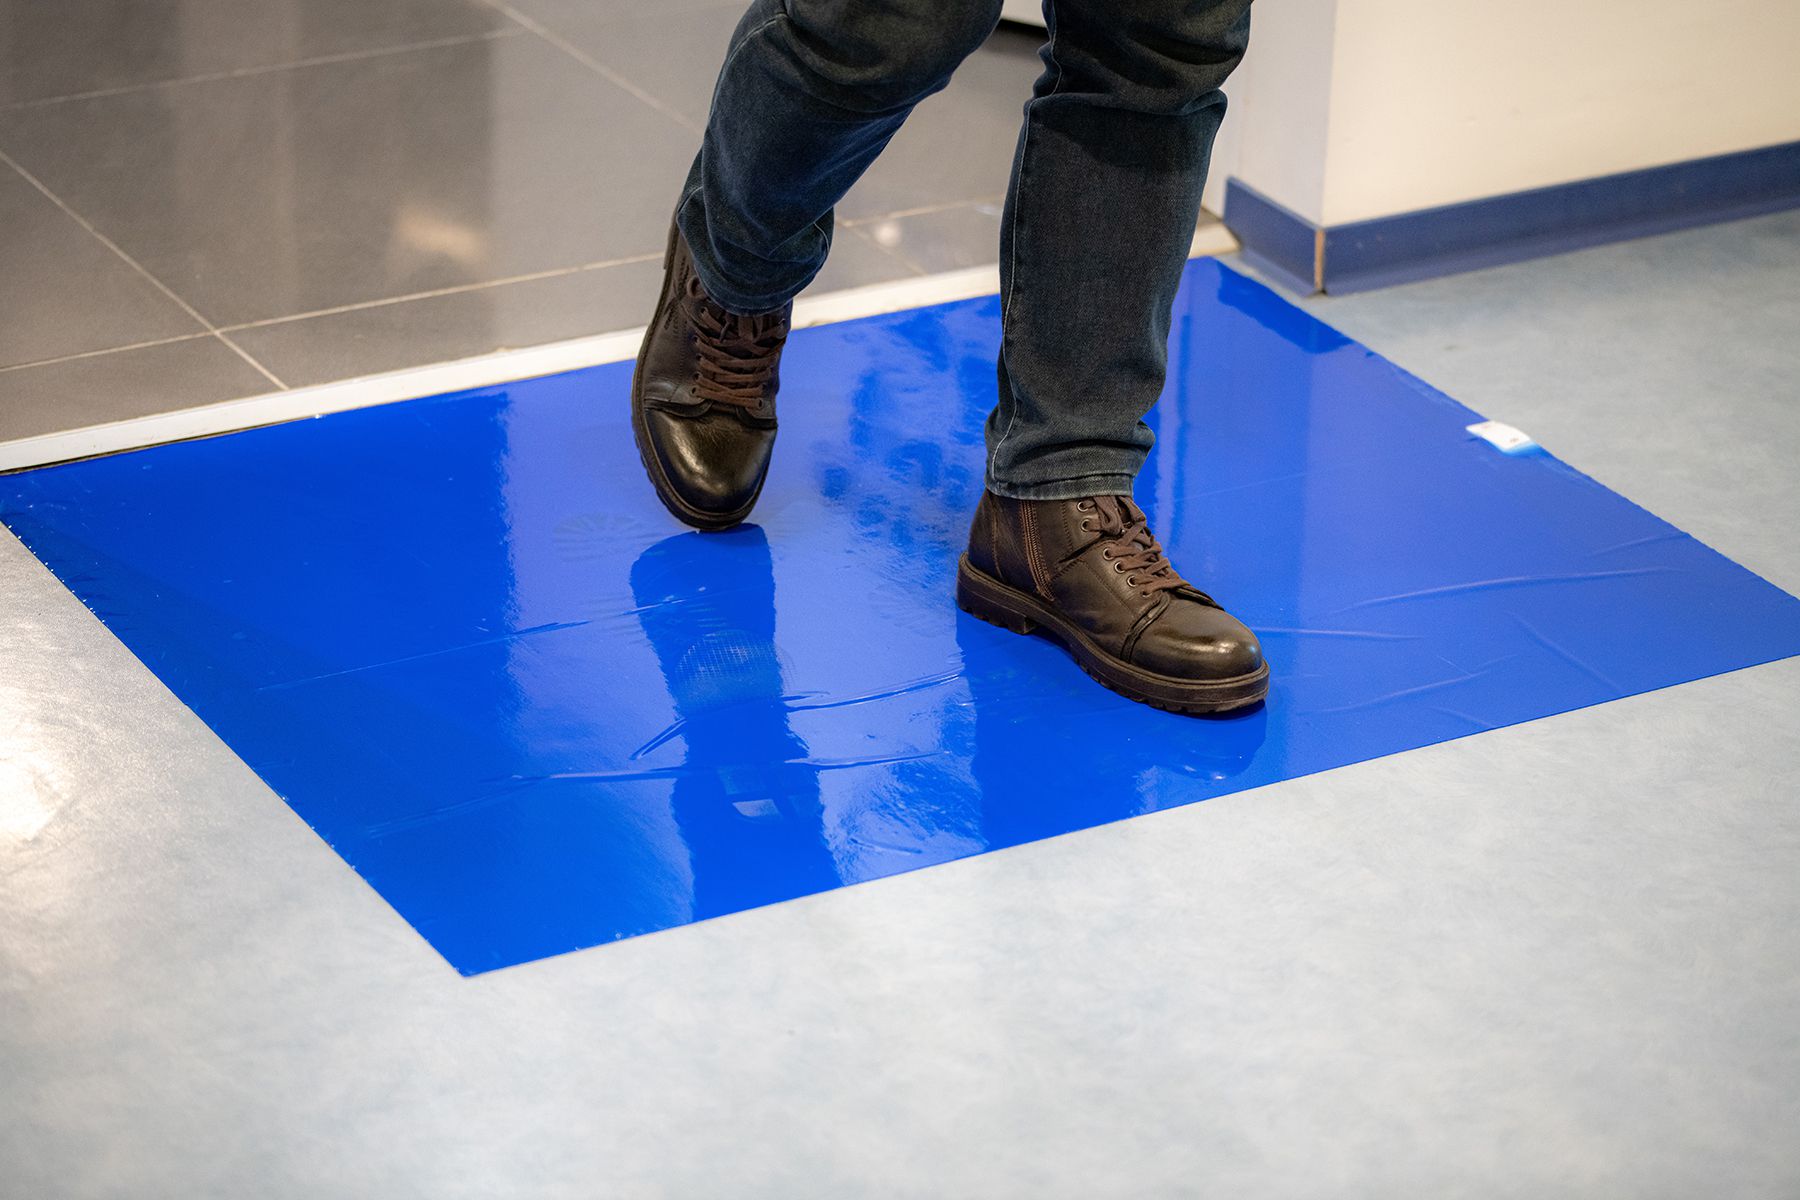 Alternative To Peel-Off Mats, Dycem Contamination Control Flooring